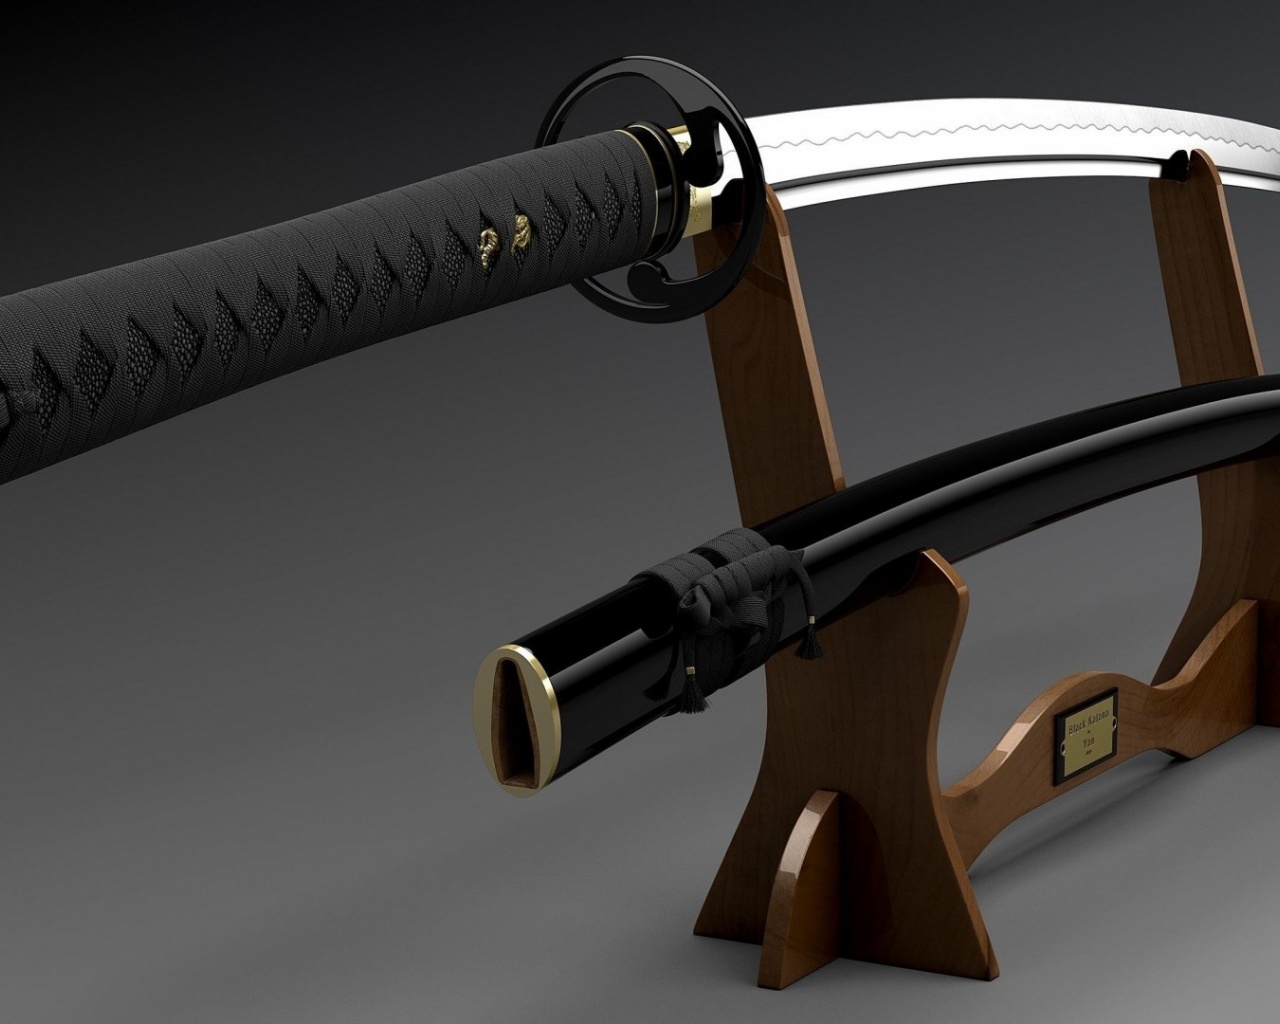 Black Katana Sword